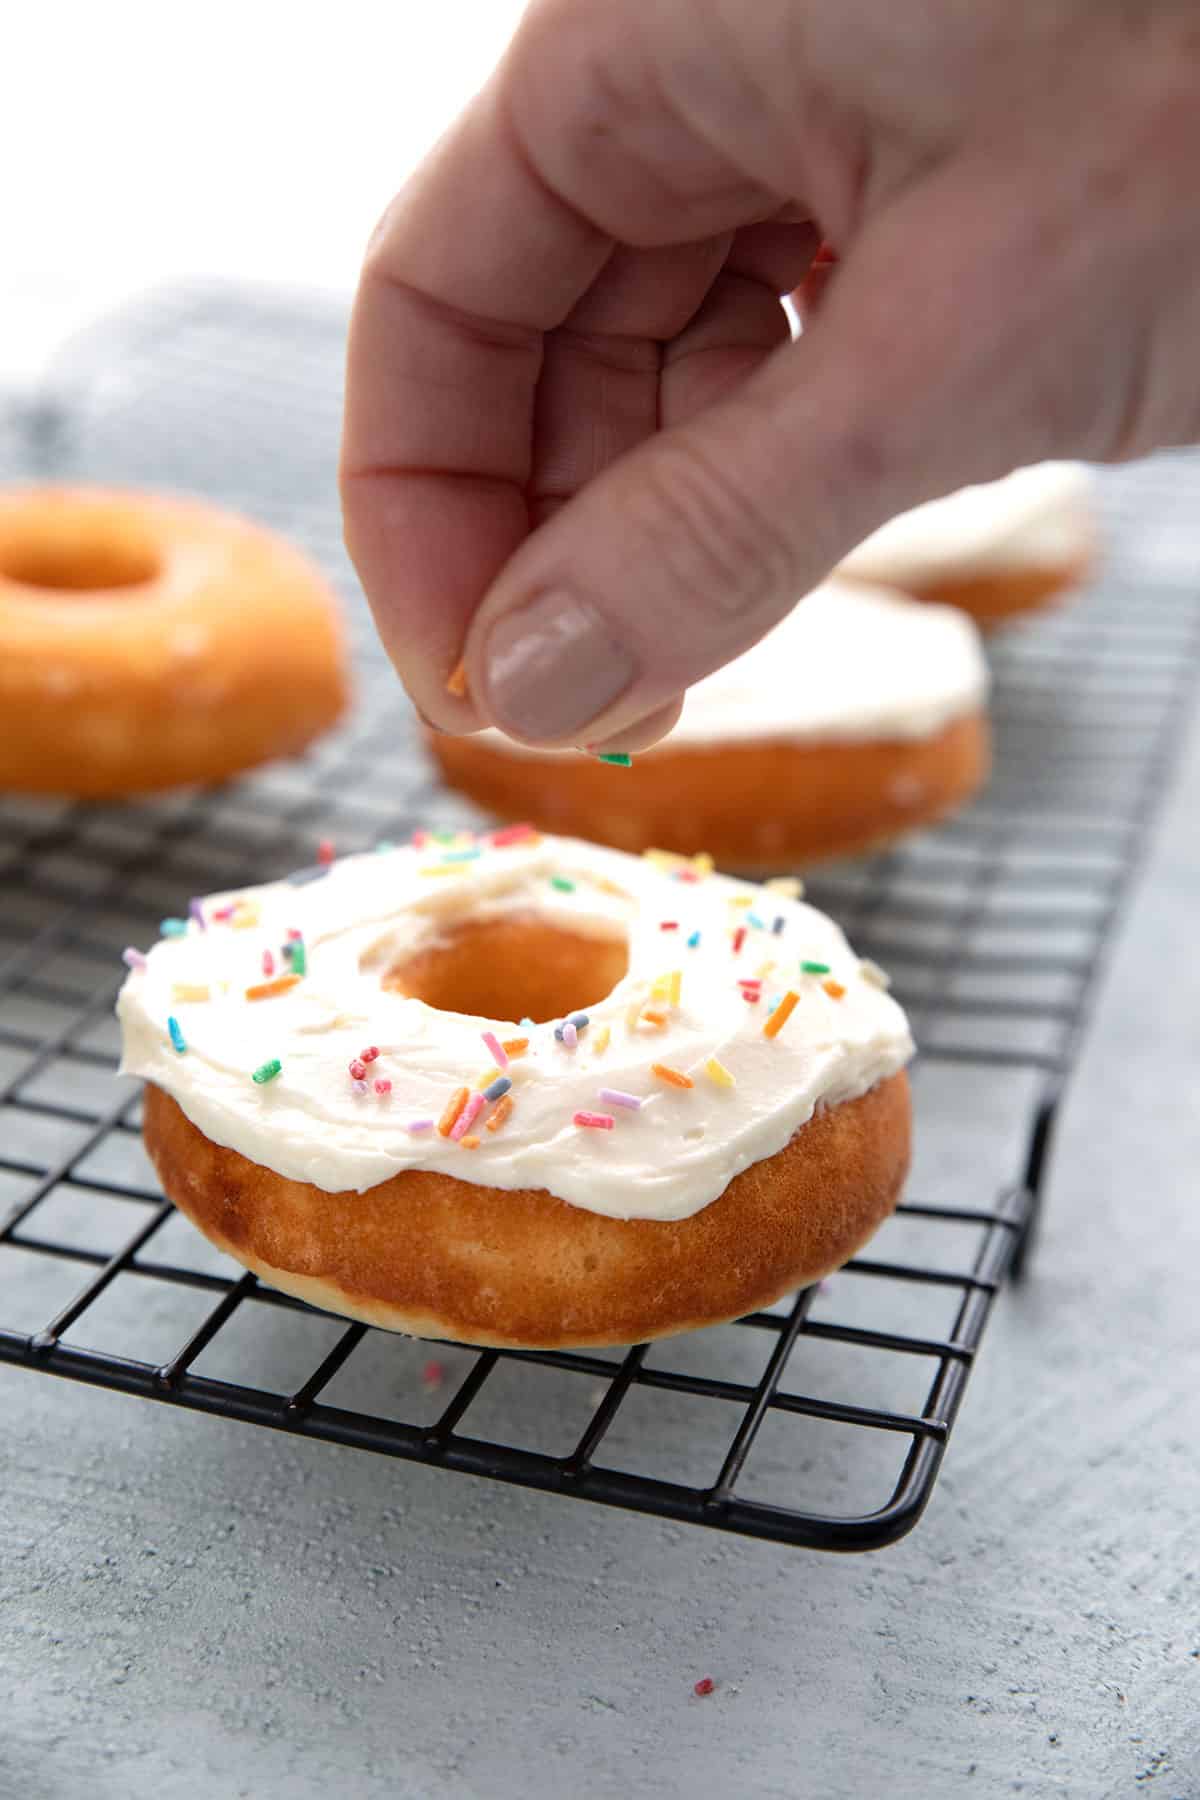 Placing keto sprinkles on a vanilla protein donut.